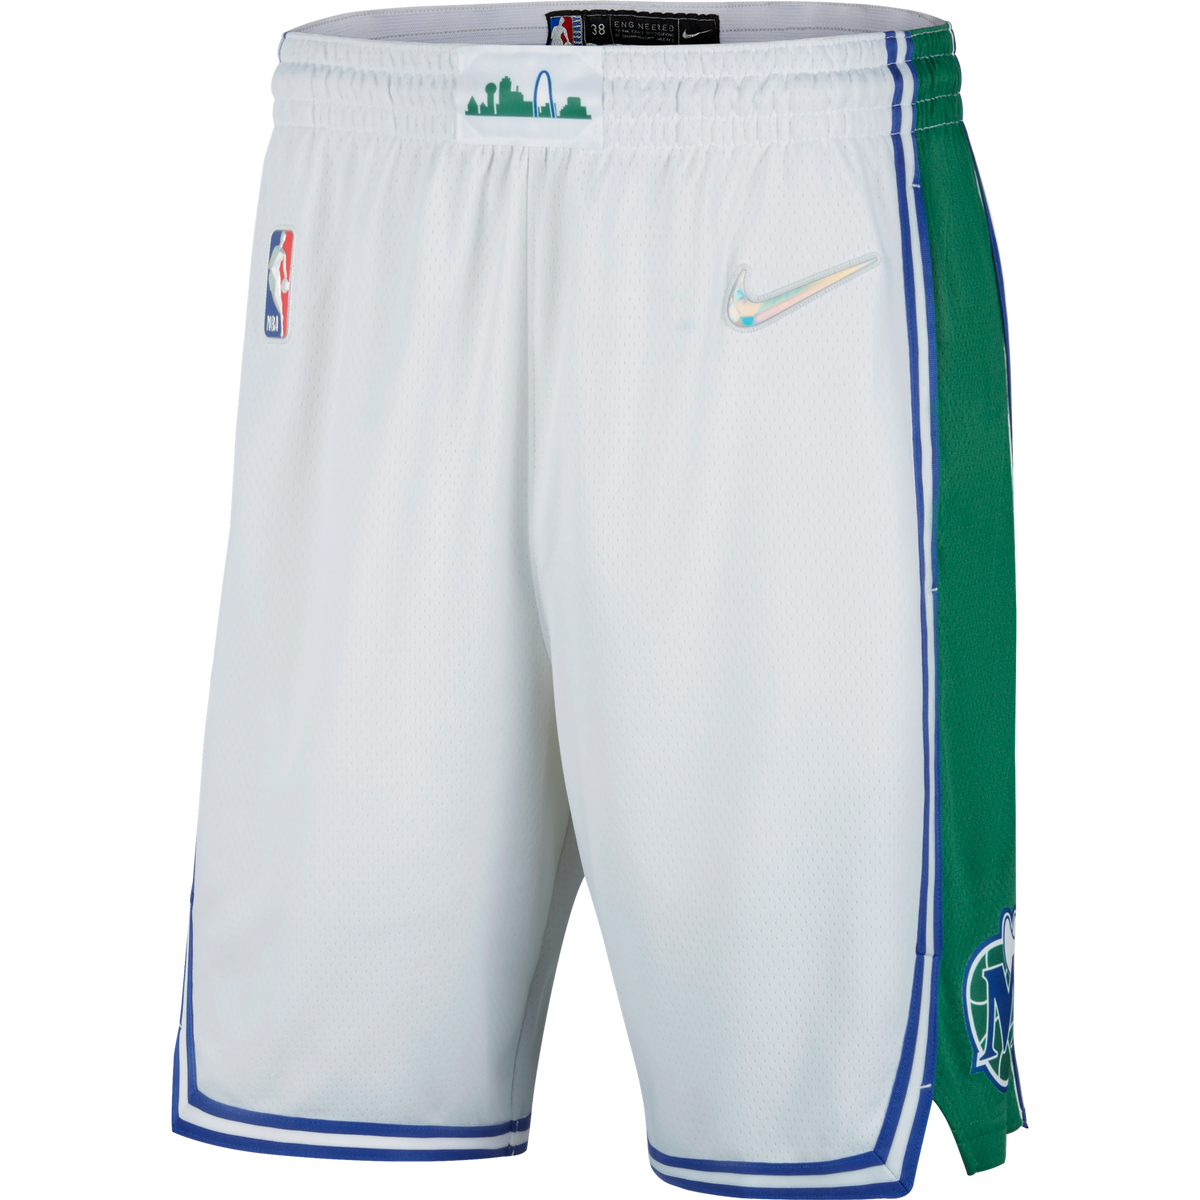 Dallas Mavericks Icon Edition Men's Nike NBA Swingman Shorts.